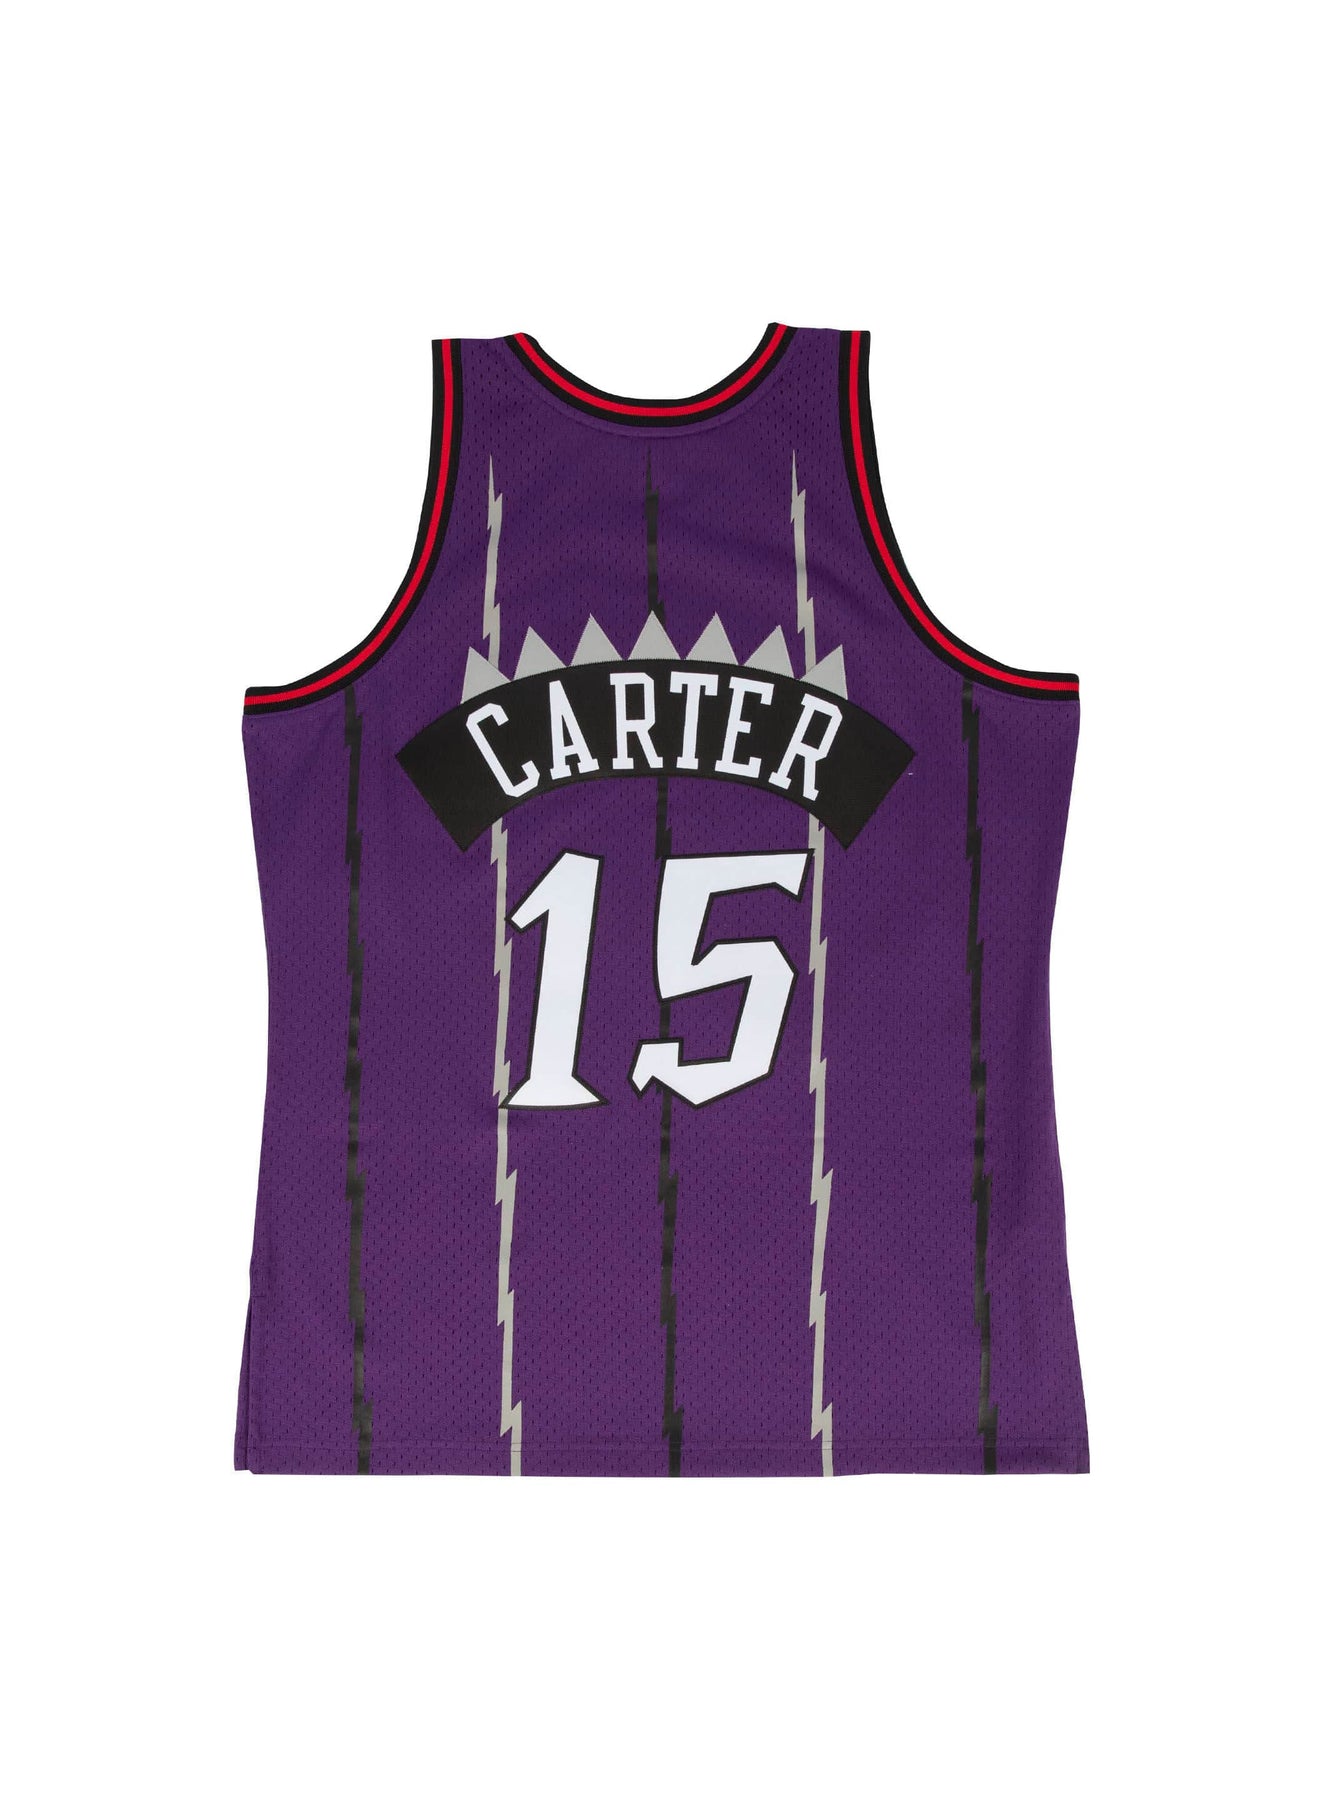 Vince Carter - Toronto Raptors Jersey Sticker for Sale by On